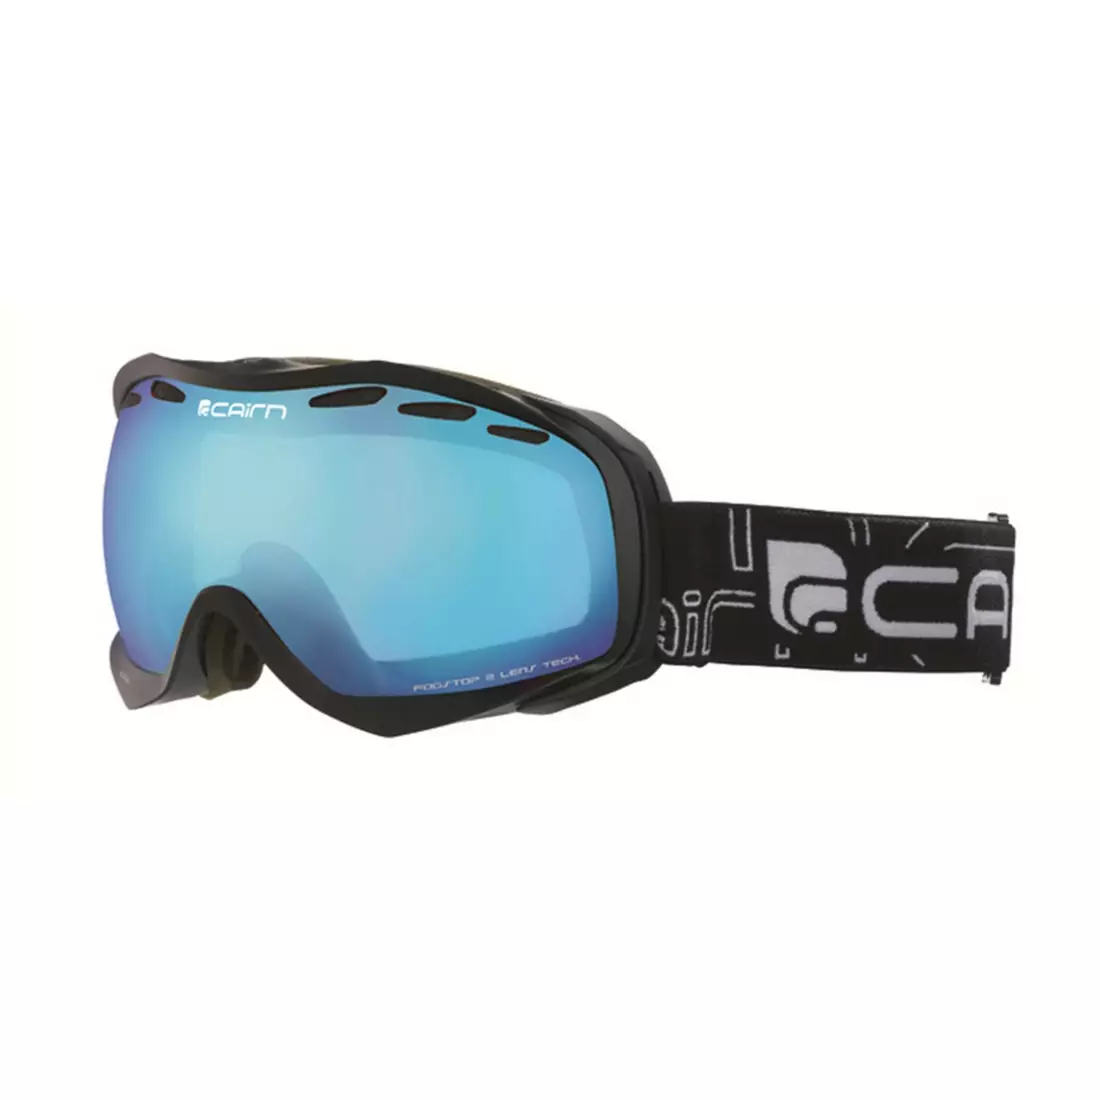 CAIRN ski/snowboard goggles ALPHA SPX3000 8202, black/blue 5808518202